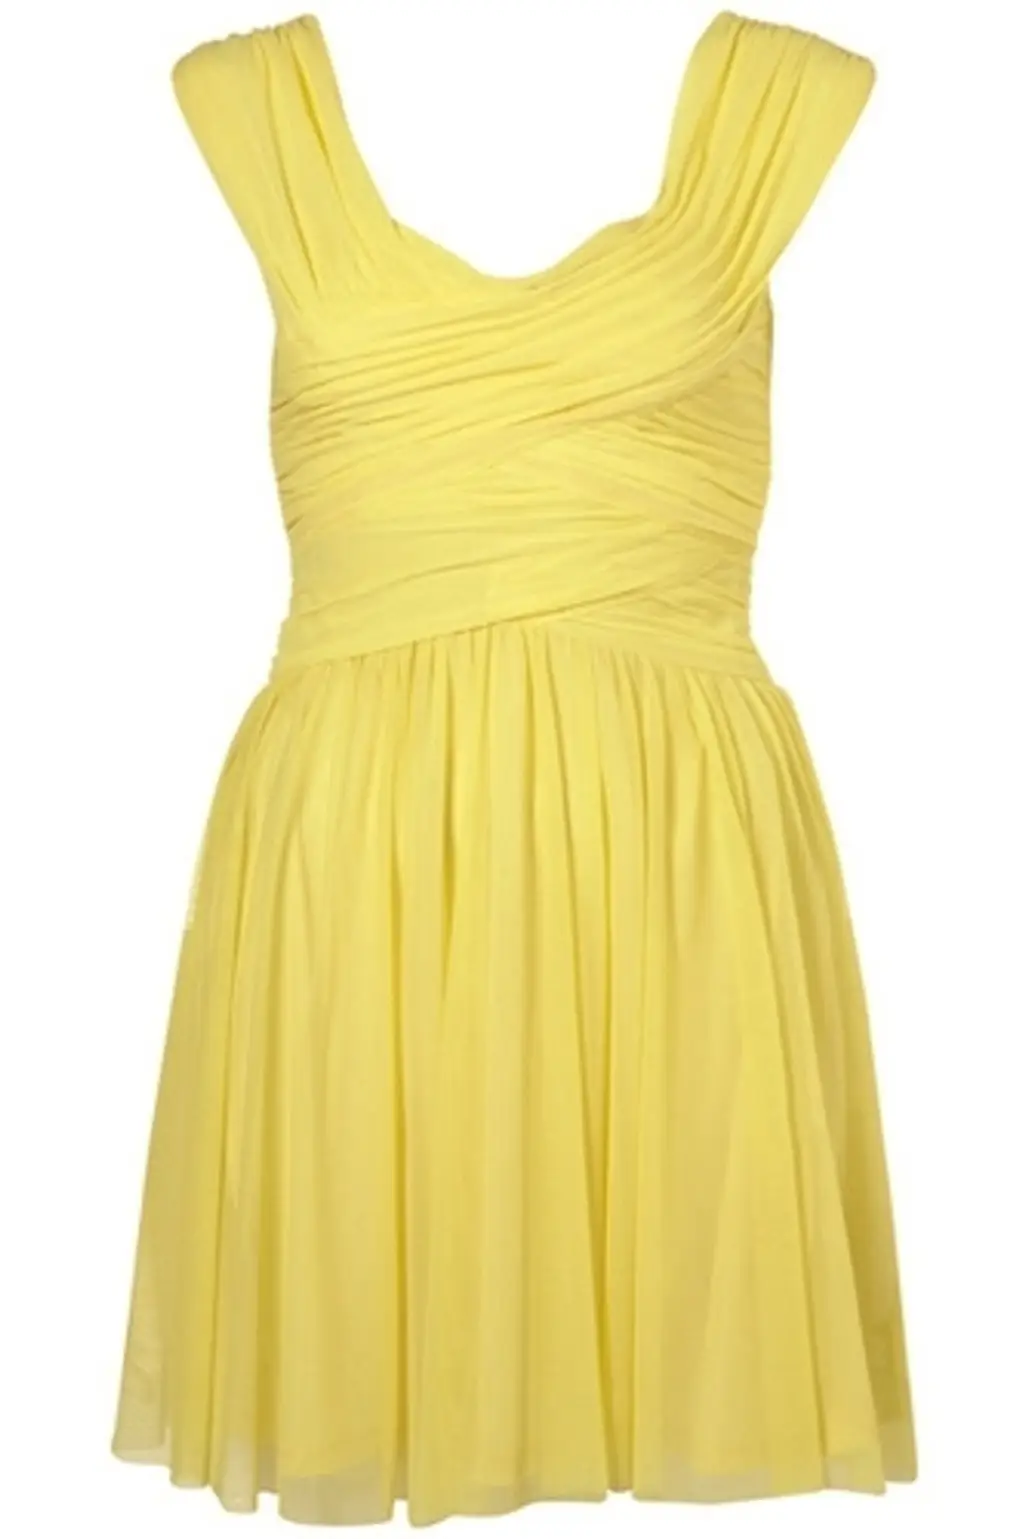 Topshop Yellow Cami Ruch Mesh Dress